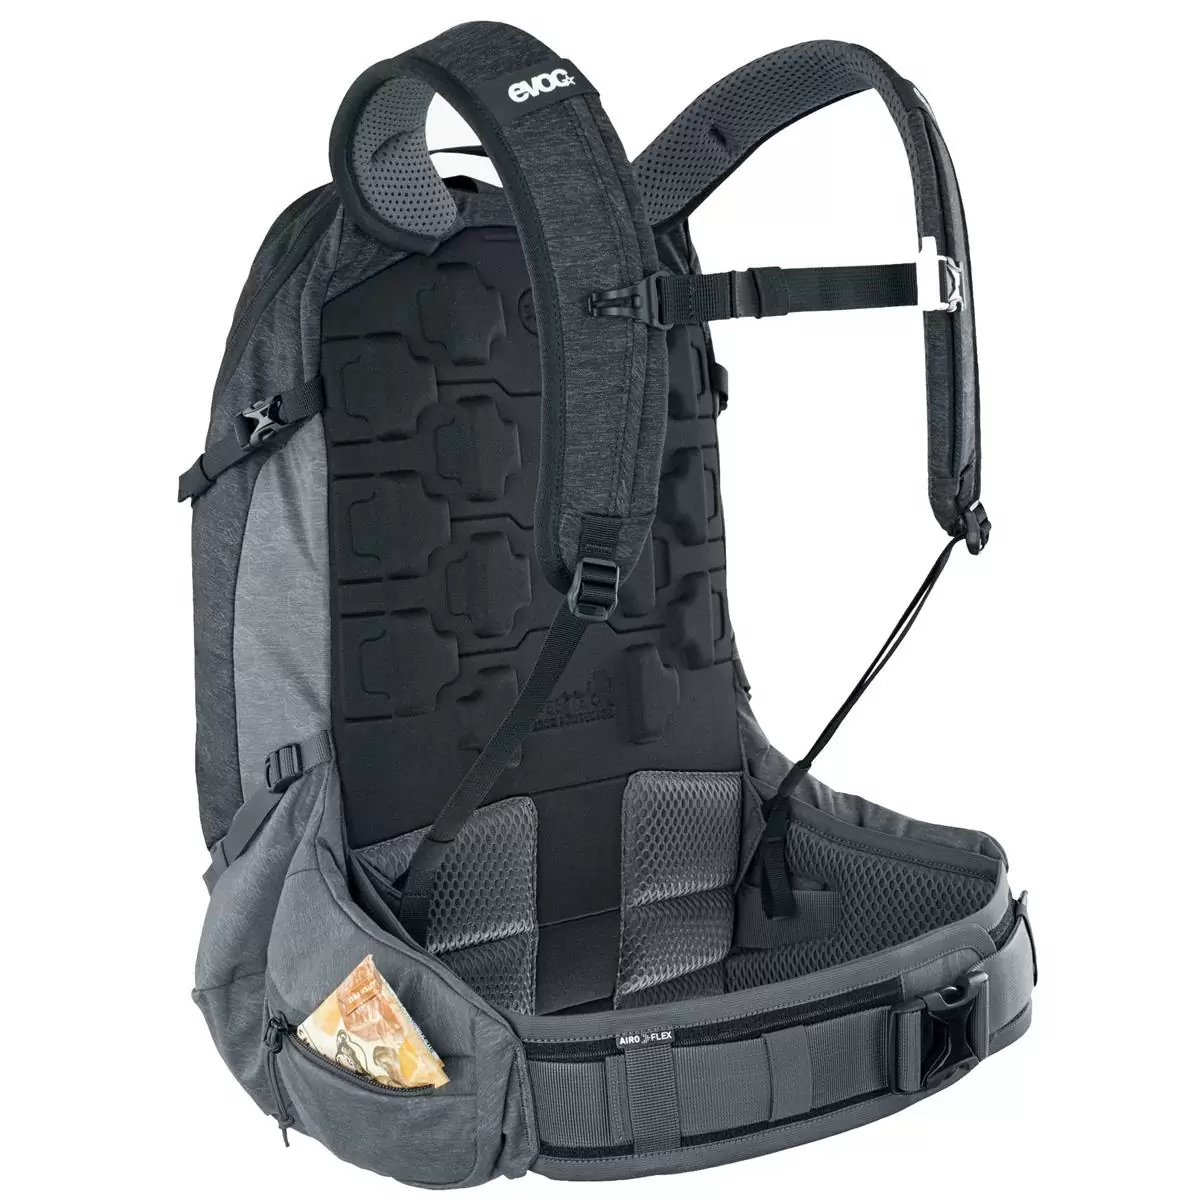 Backpack Trail Pro 26 litri black - carbon grey size L/XL #2